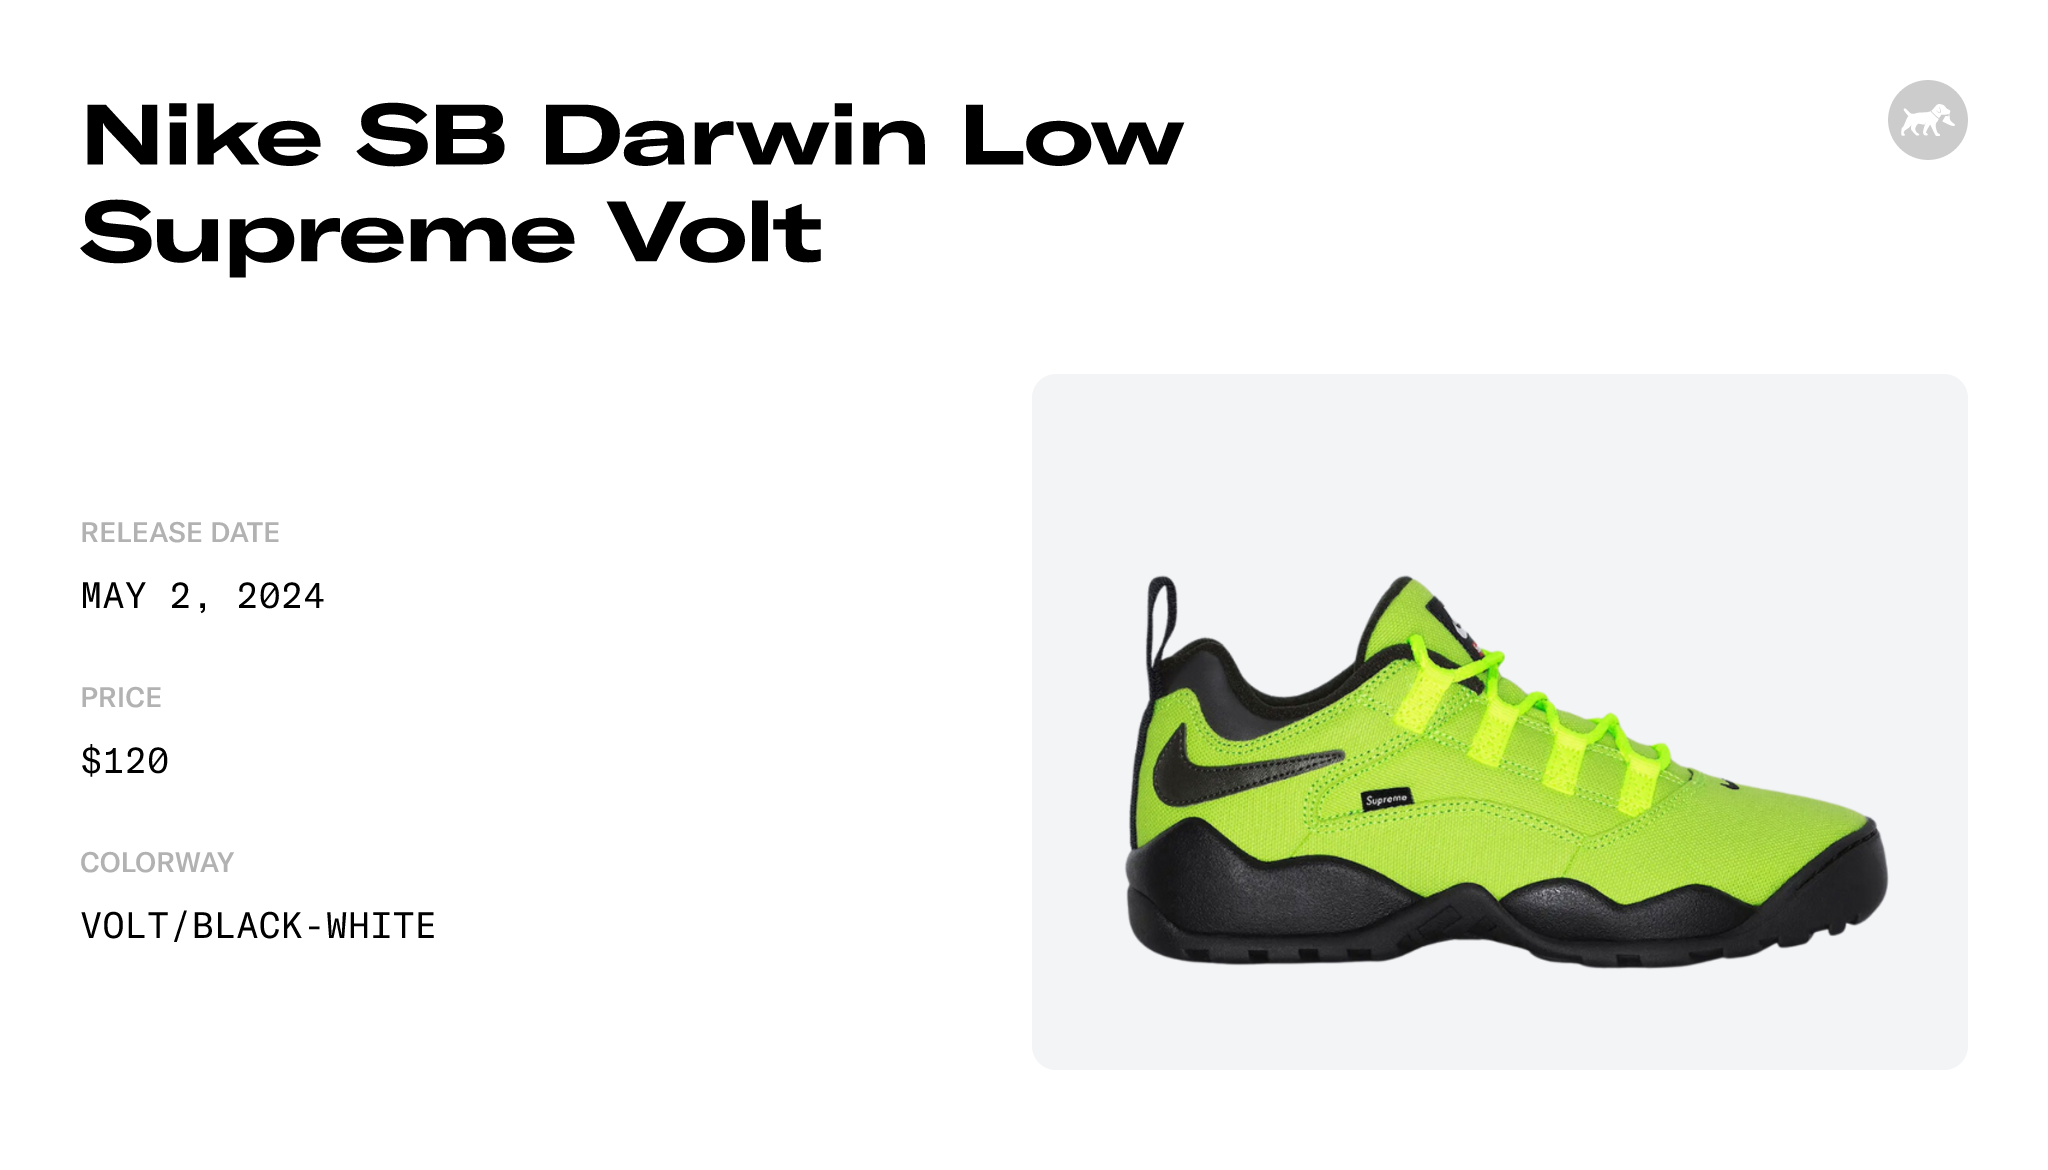 Nike SB Darwin Low Supreme Volt - FQ3000-700 Raffles and Release Date